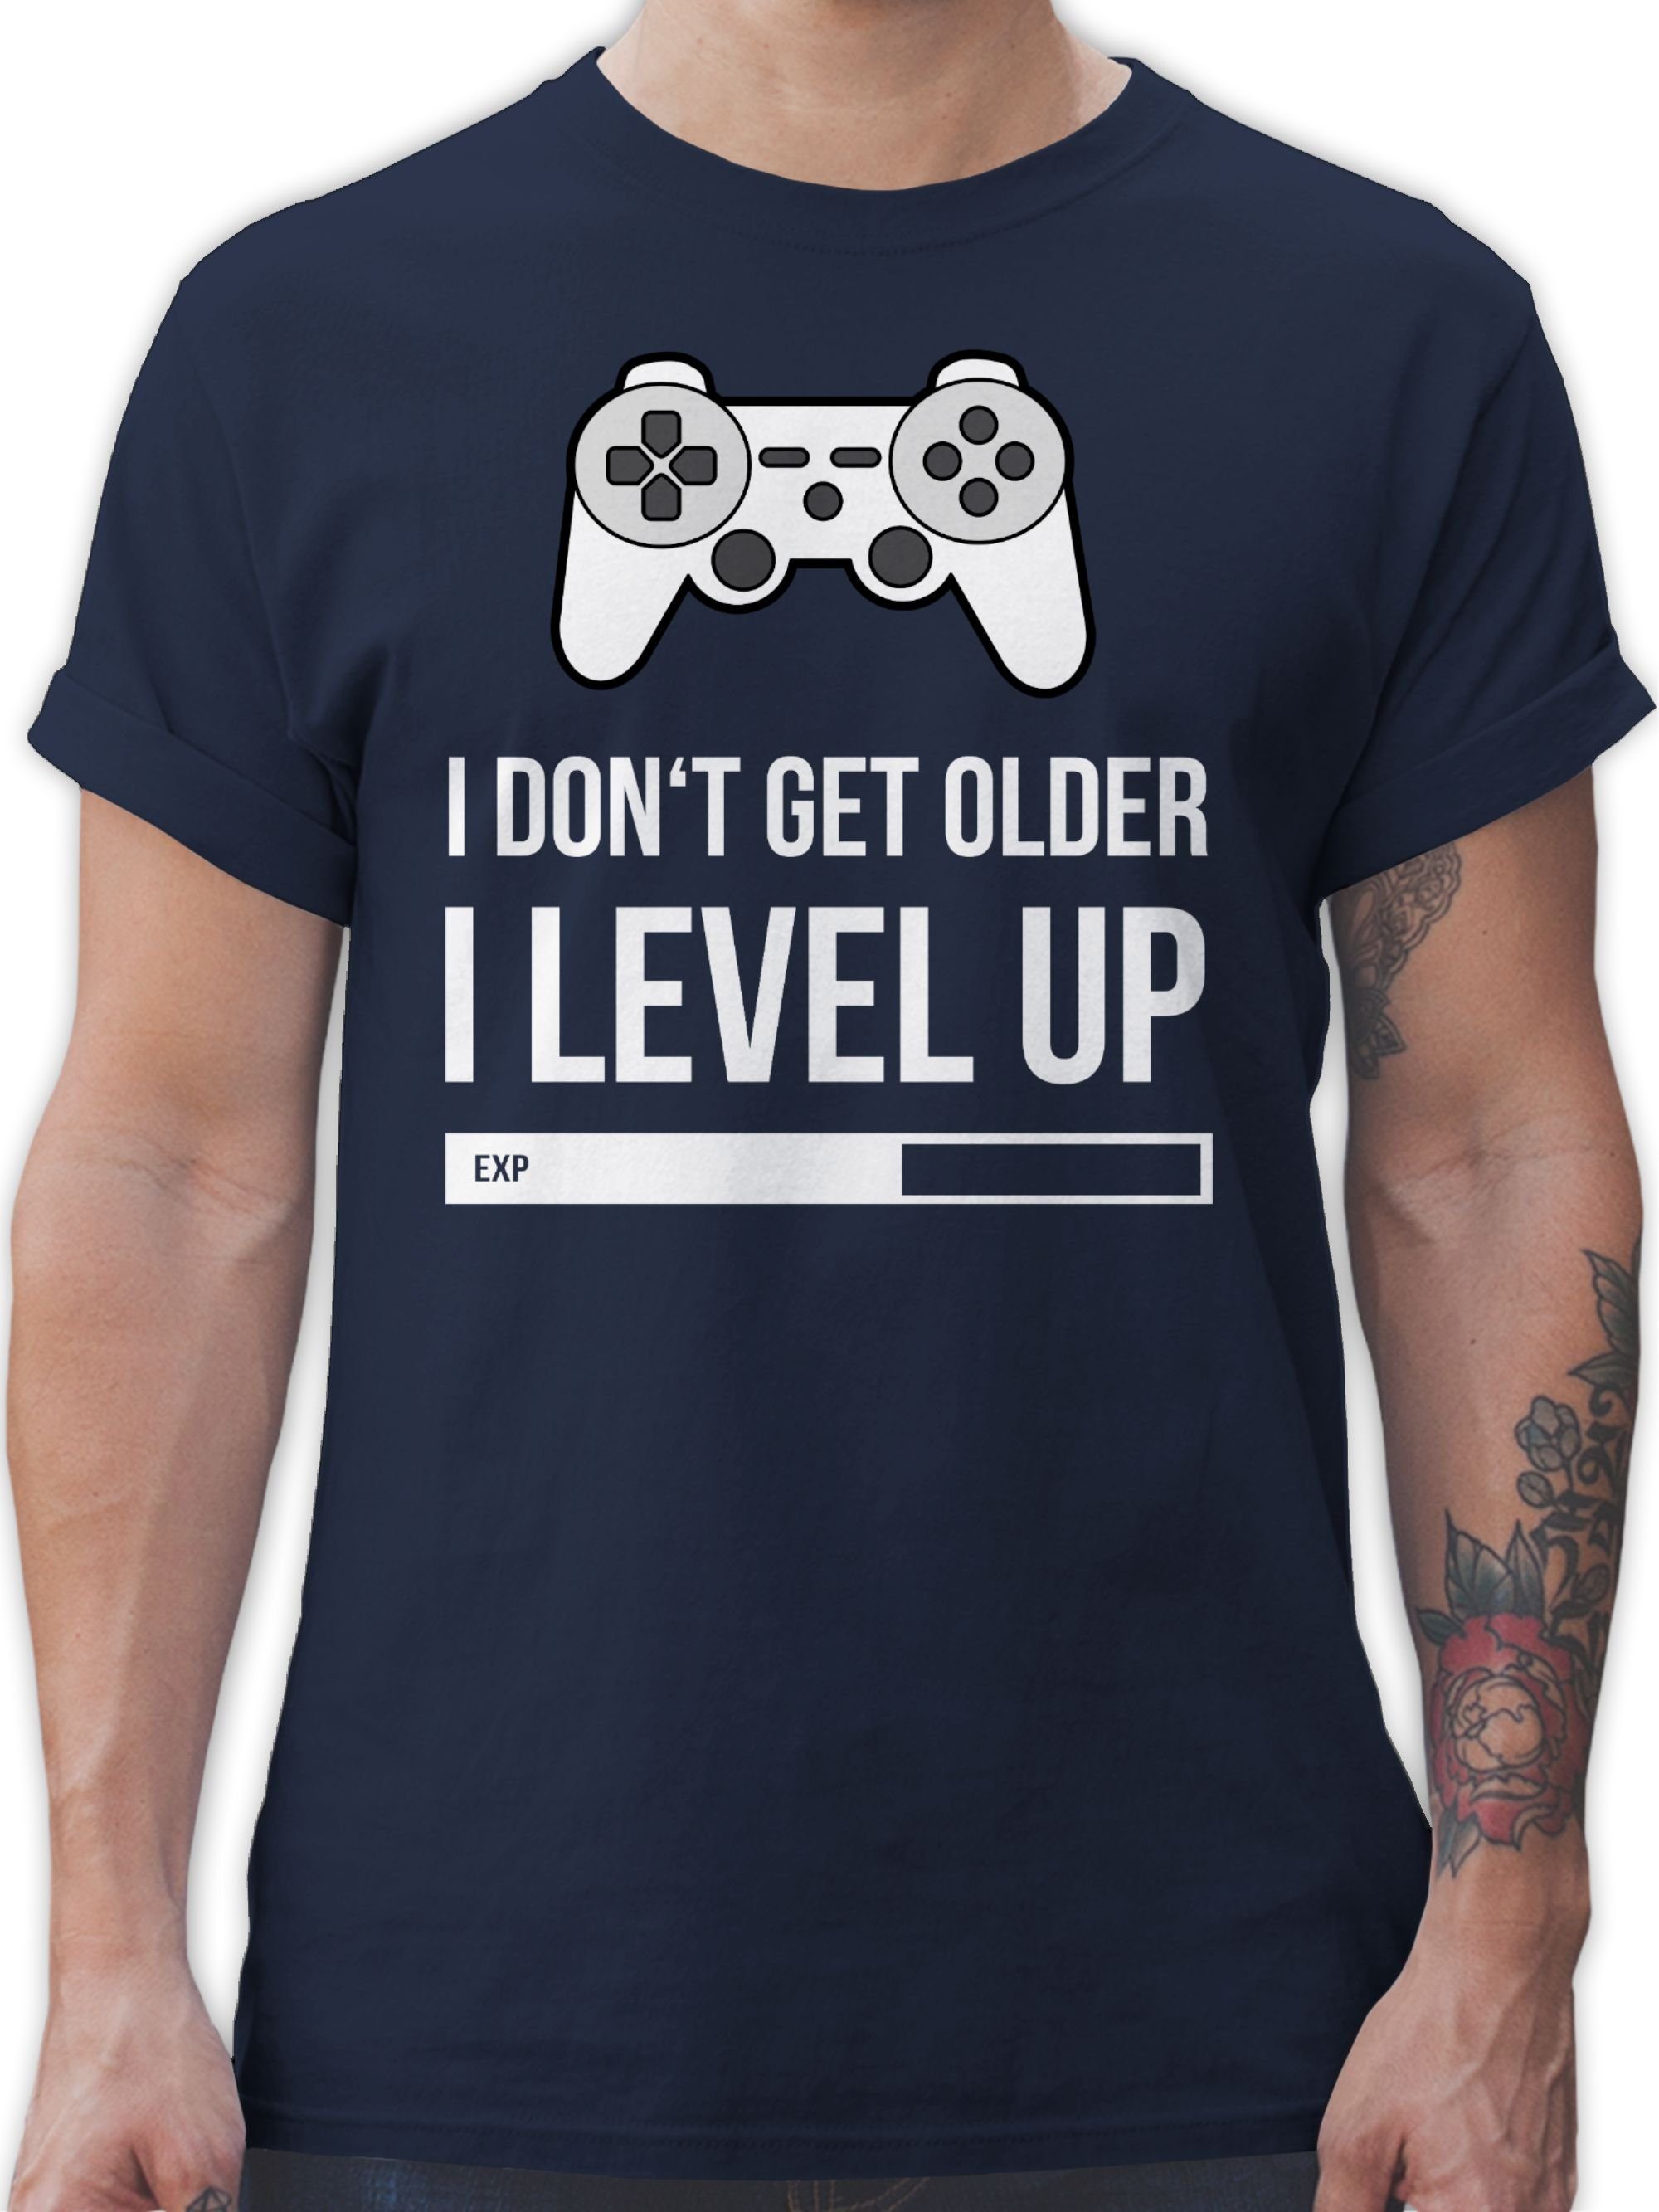 Shirtracer T-Shirt I don't Level Geschenk up Geburtstag get Blau Navy 02 older I